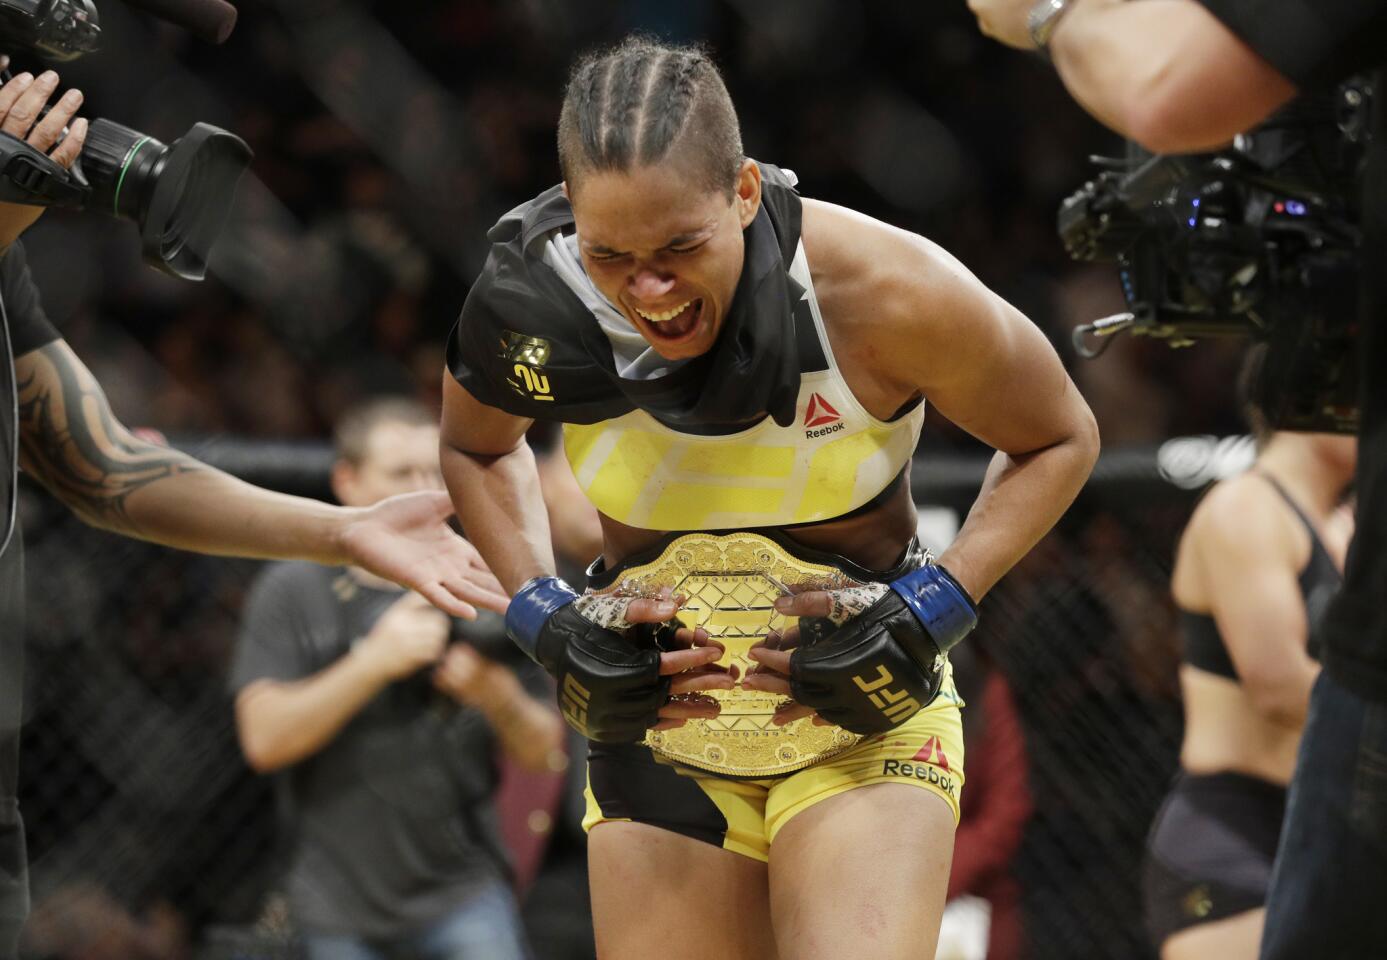 Amanda Nunes celebrates after defeating Miesha Tate to claim the women's bantamweight title at UFC 200 in Las Vegas on July 9.